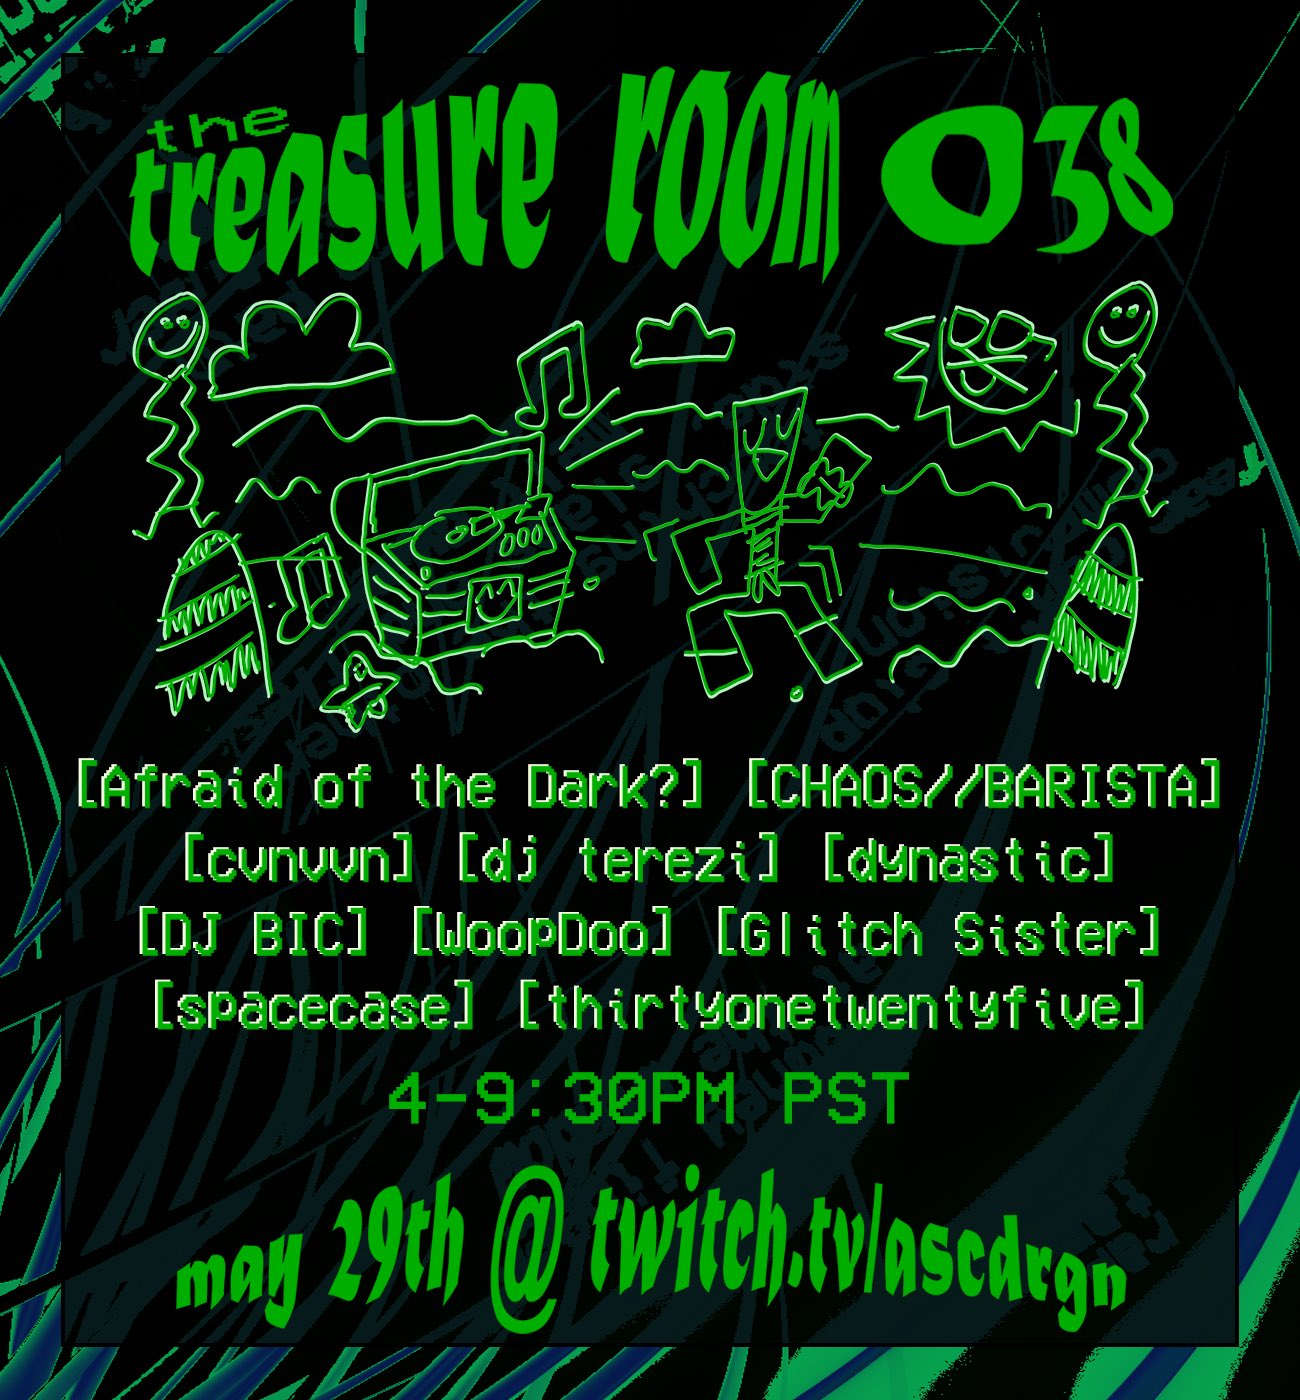 Treasure Room 038 poster